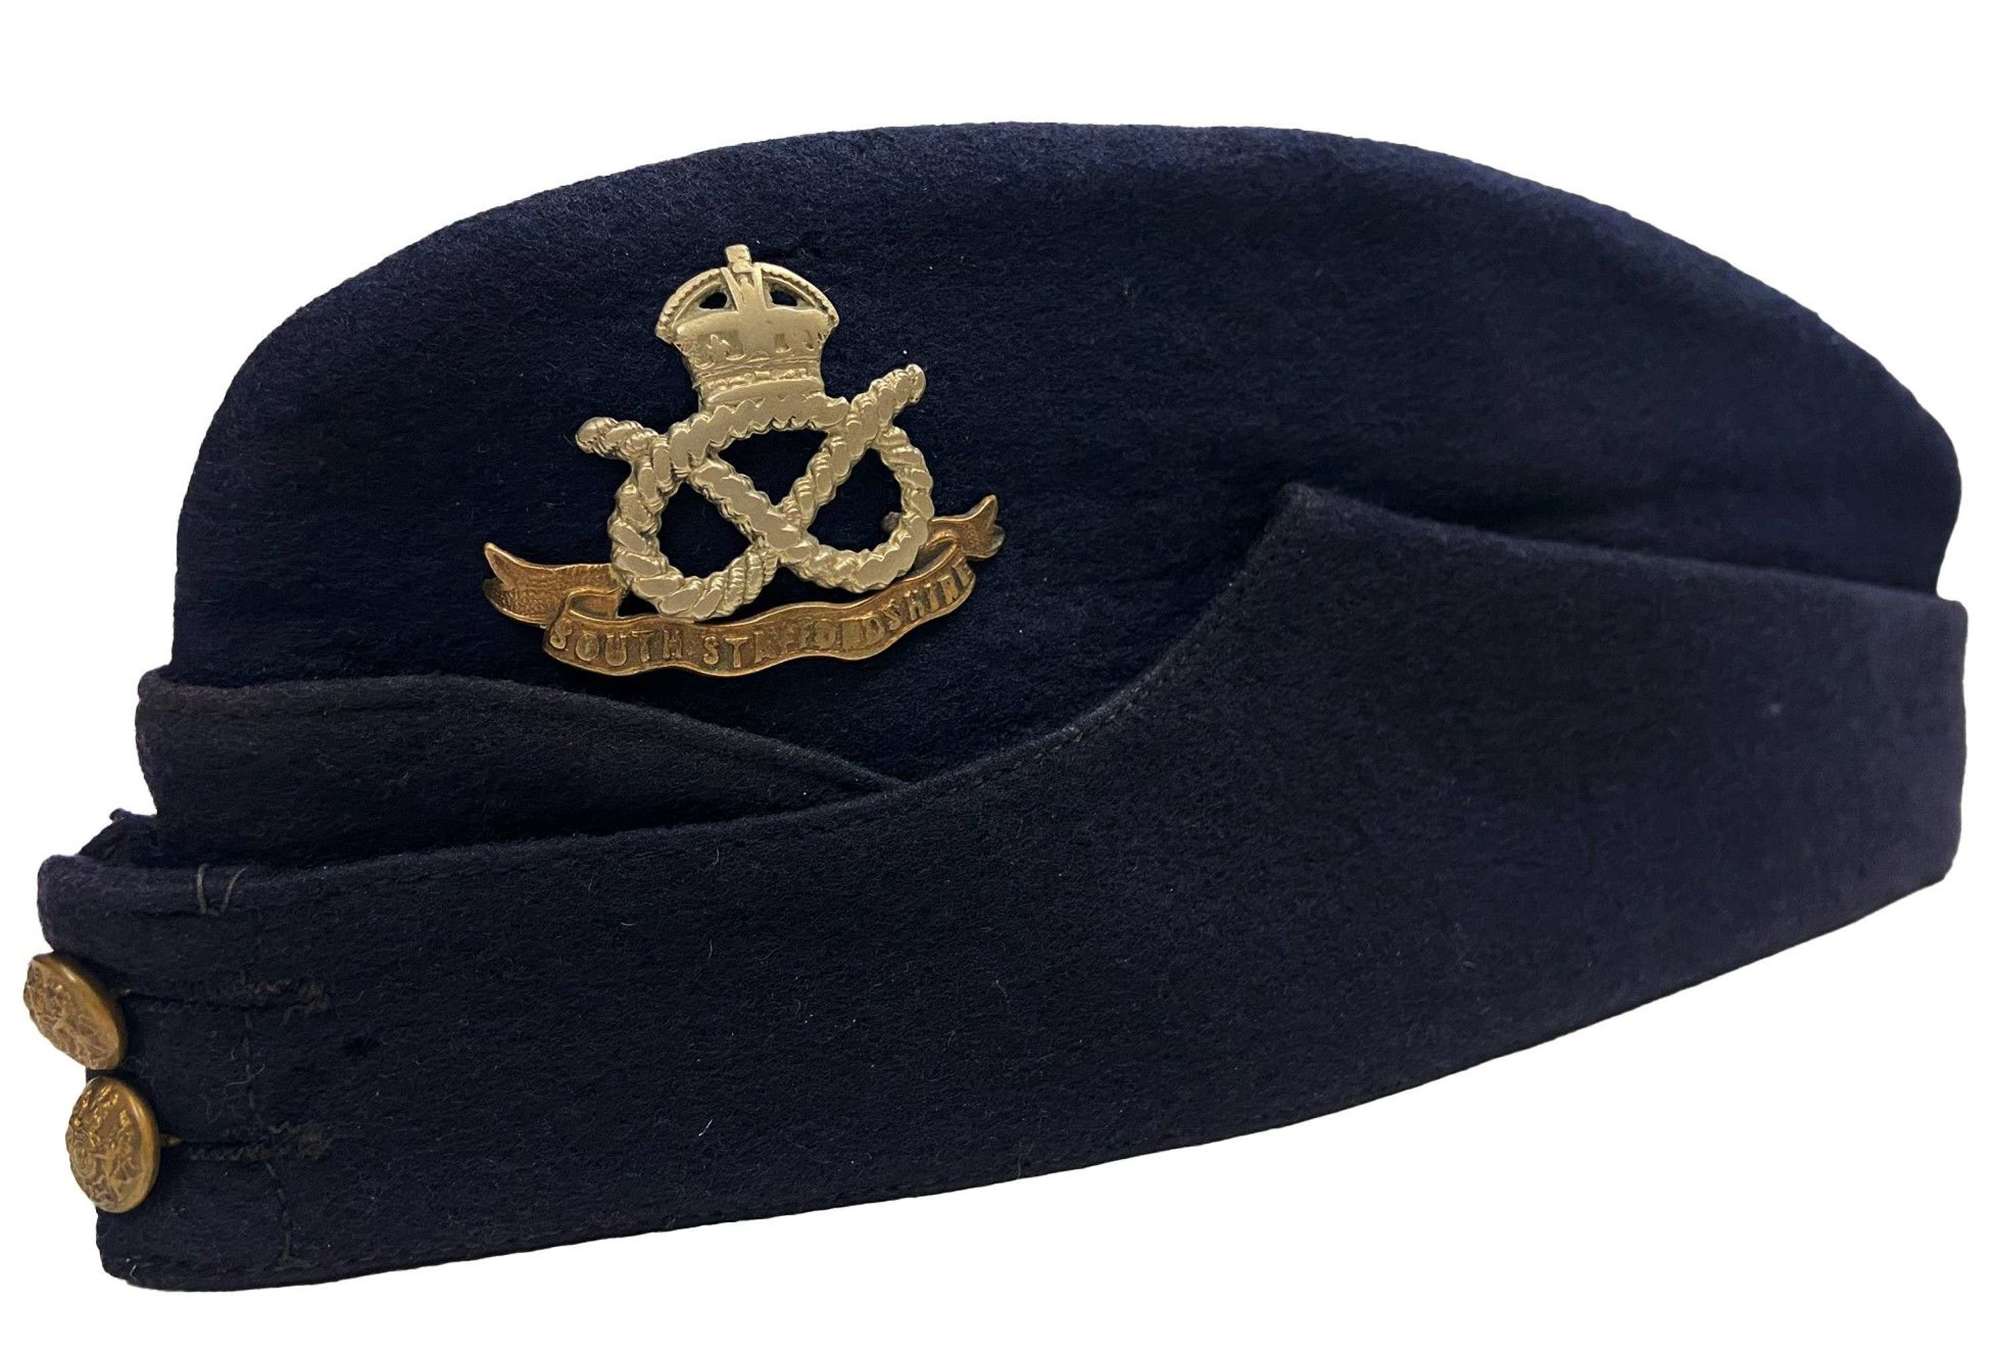 Original South Staffordshire Regiment Coloured Field Service Cap